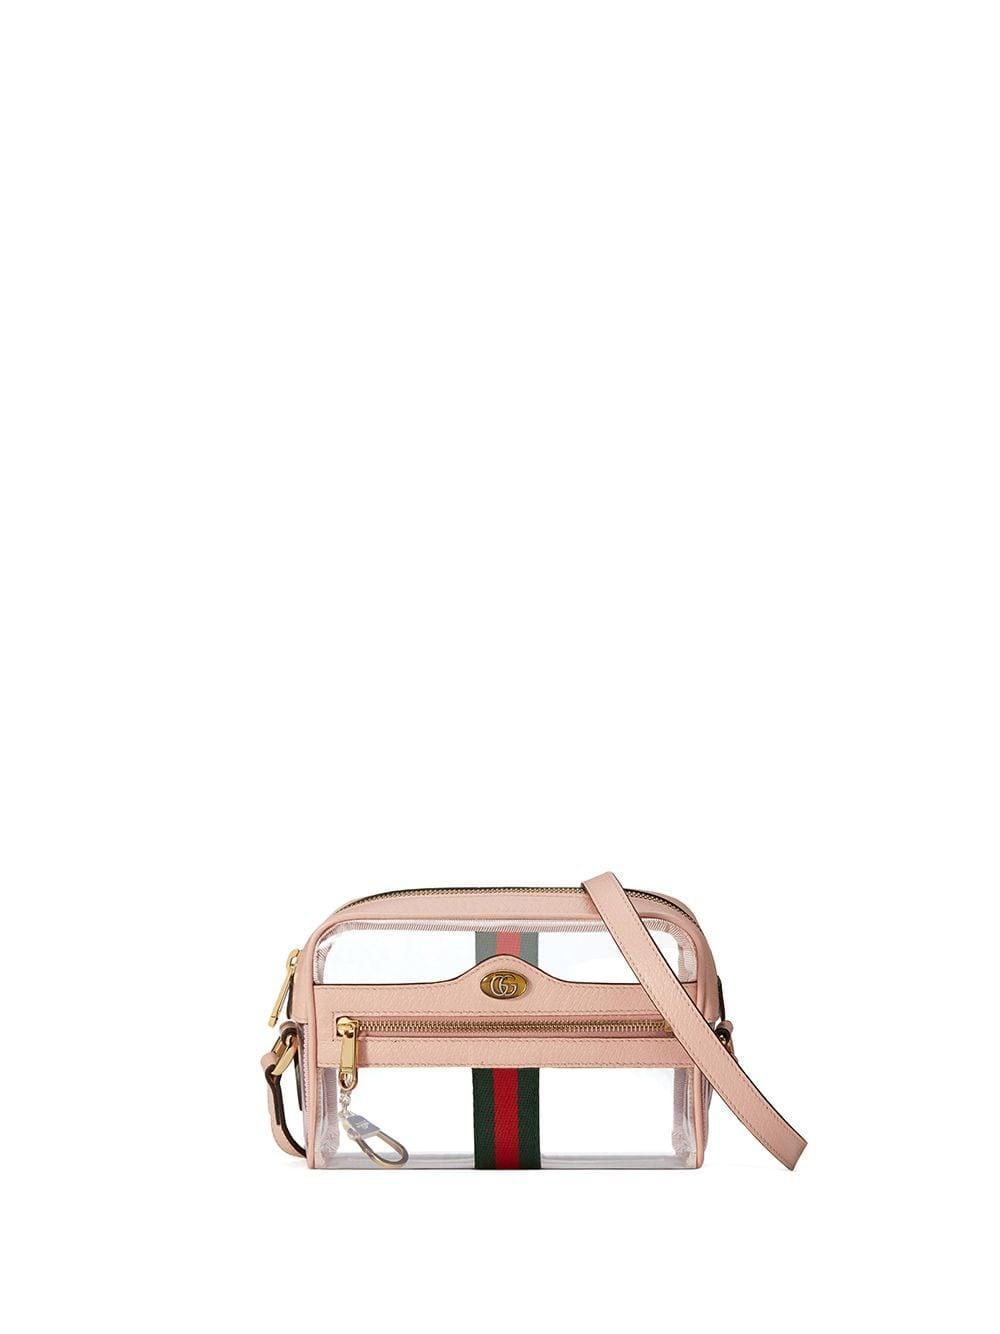 Gucci Ophidia Shoulder Bag PVC Mini Clear 5859110